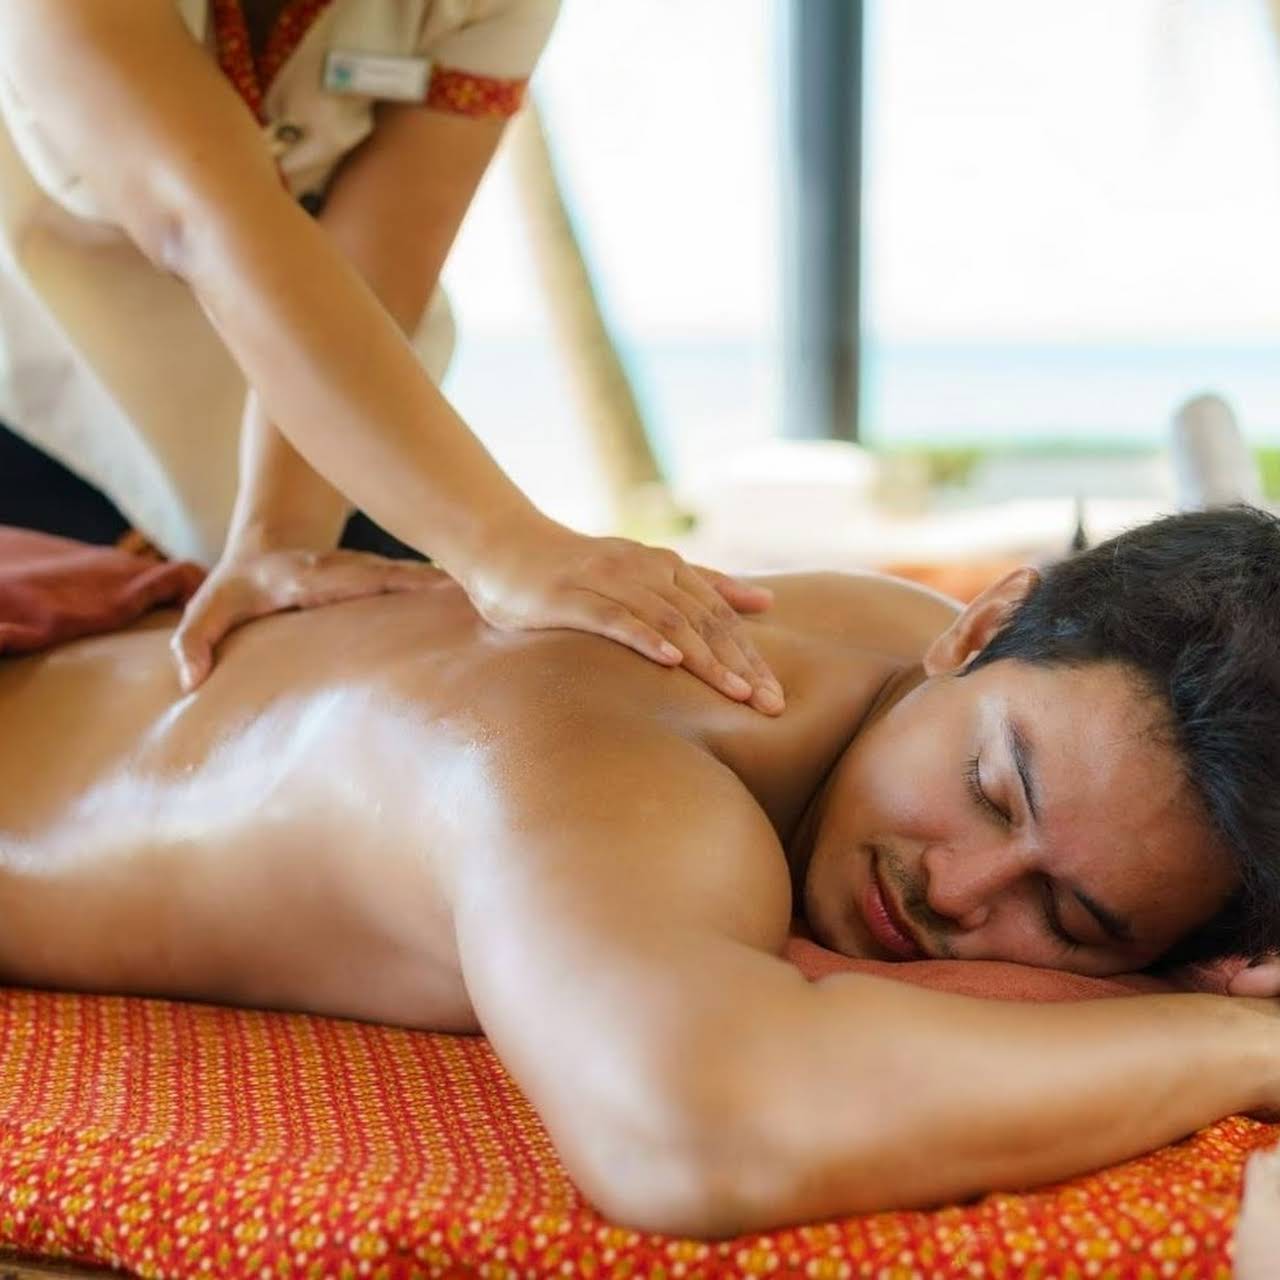 Full Body to Body Massage by Girls Dardahind 9784700979 - Rajasthan - Jaipur ID1557170 2